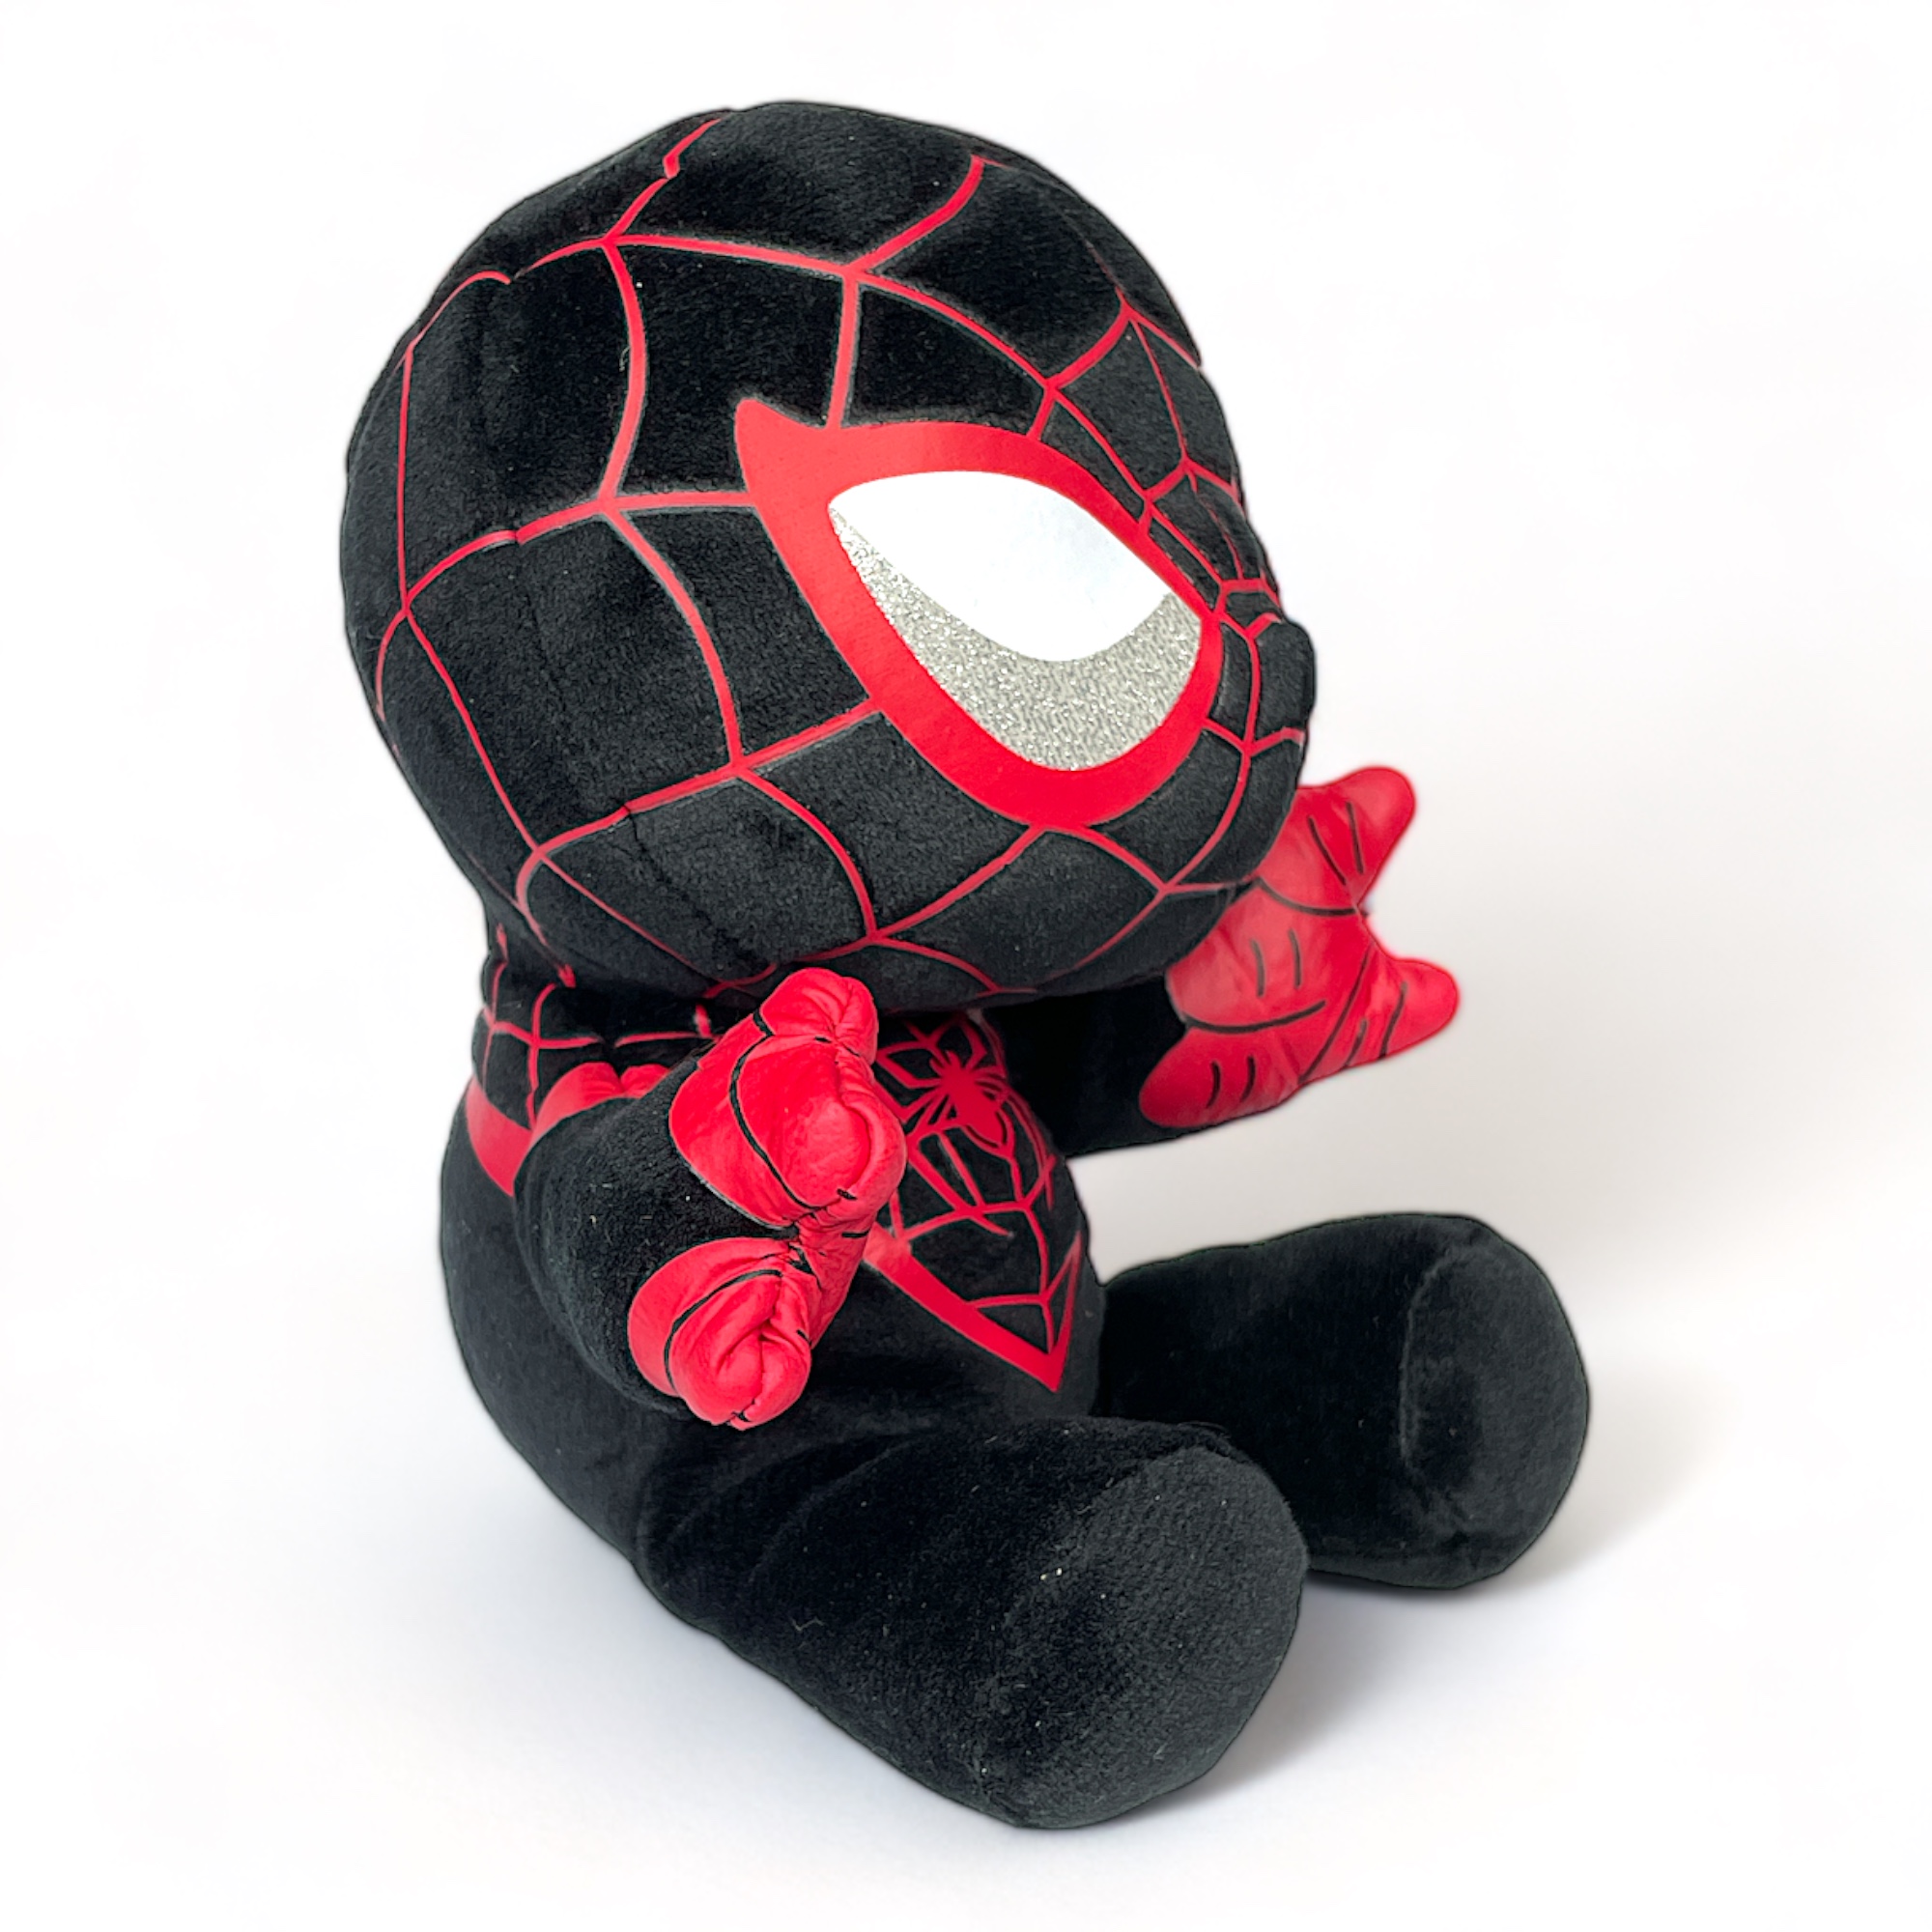 Miles Morales Spider-Man Plüschfigur (18 cm) - Marvel